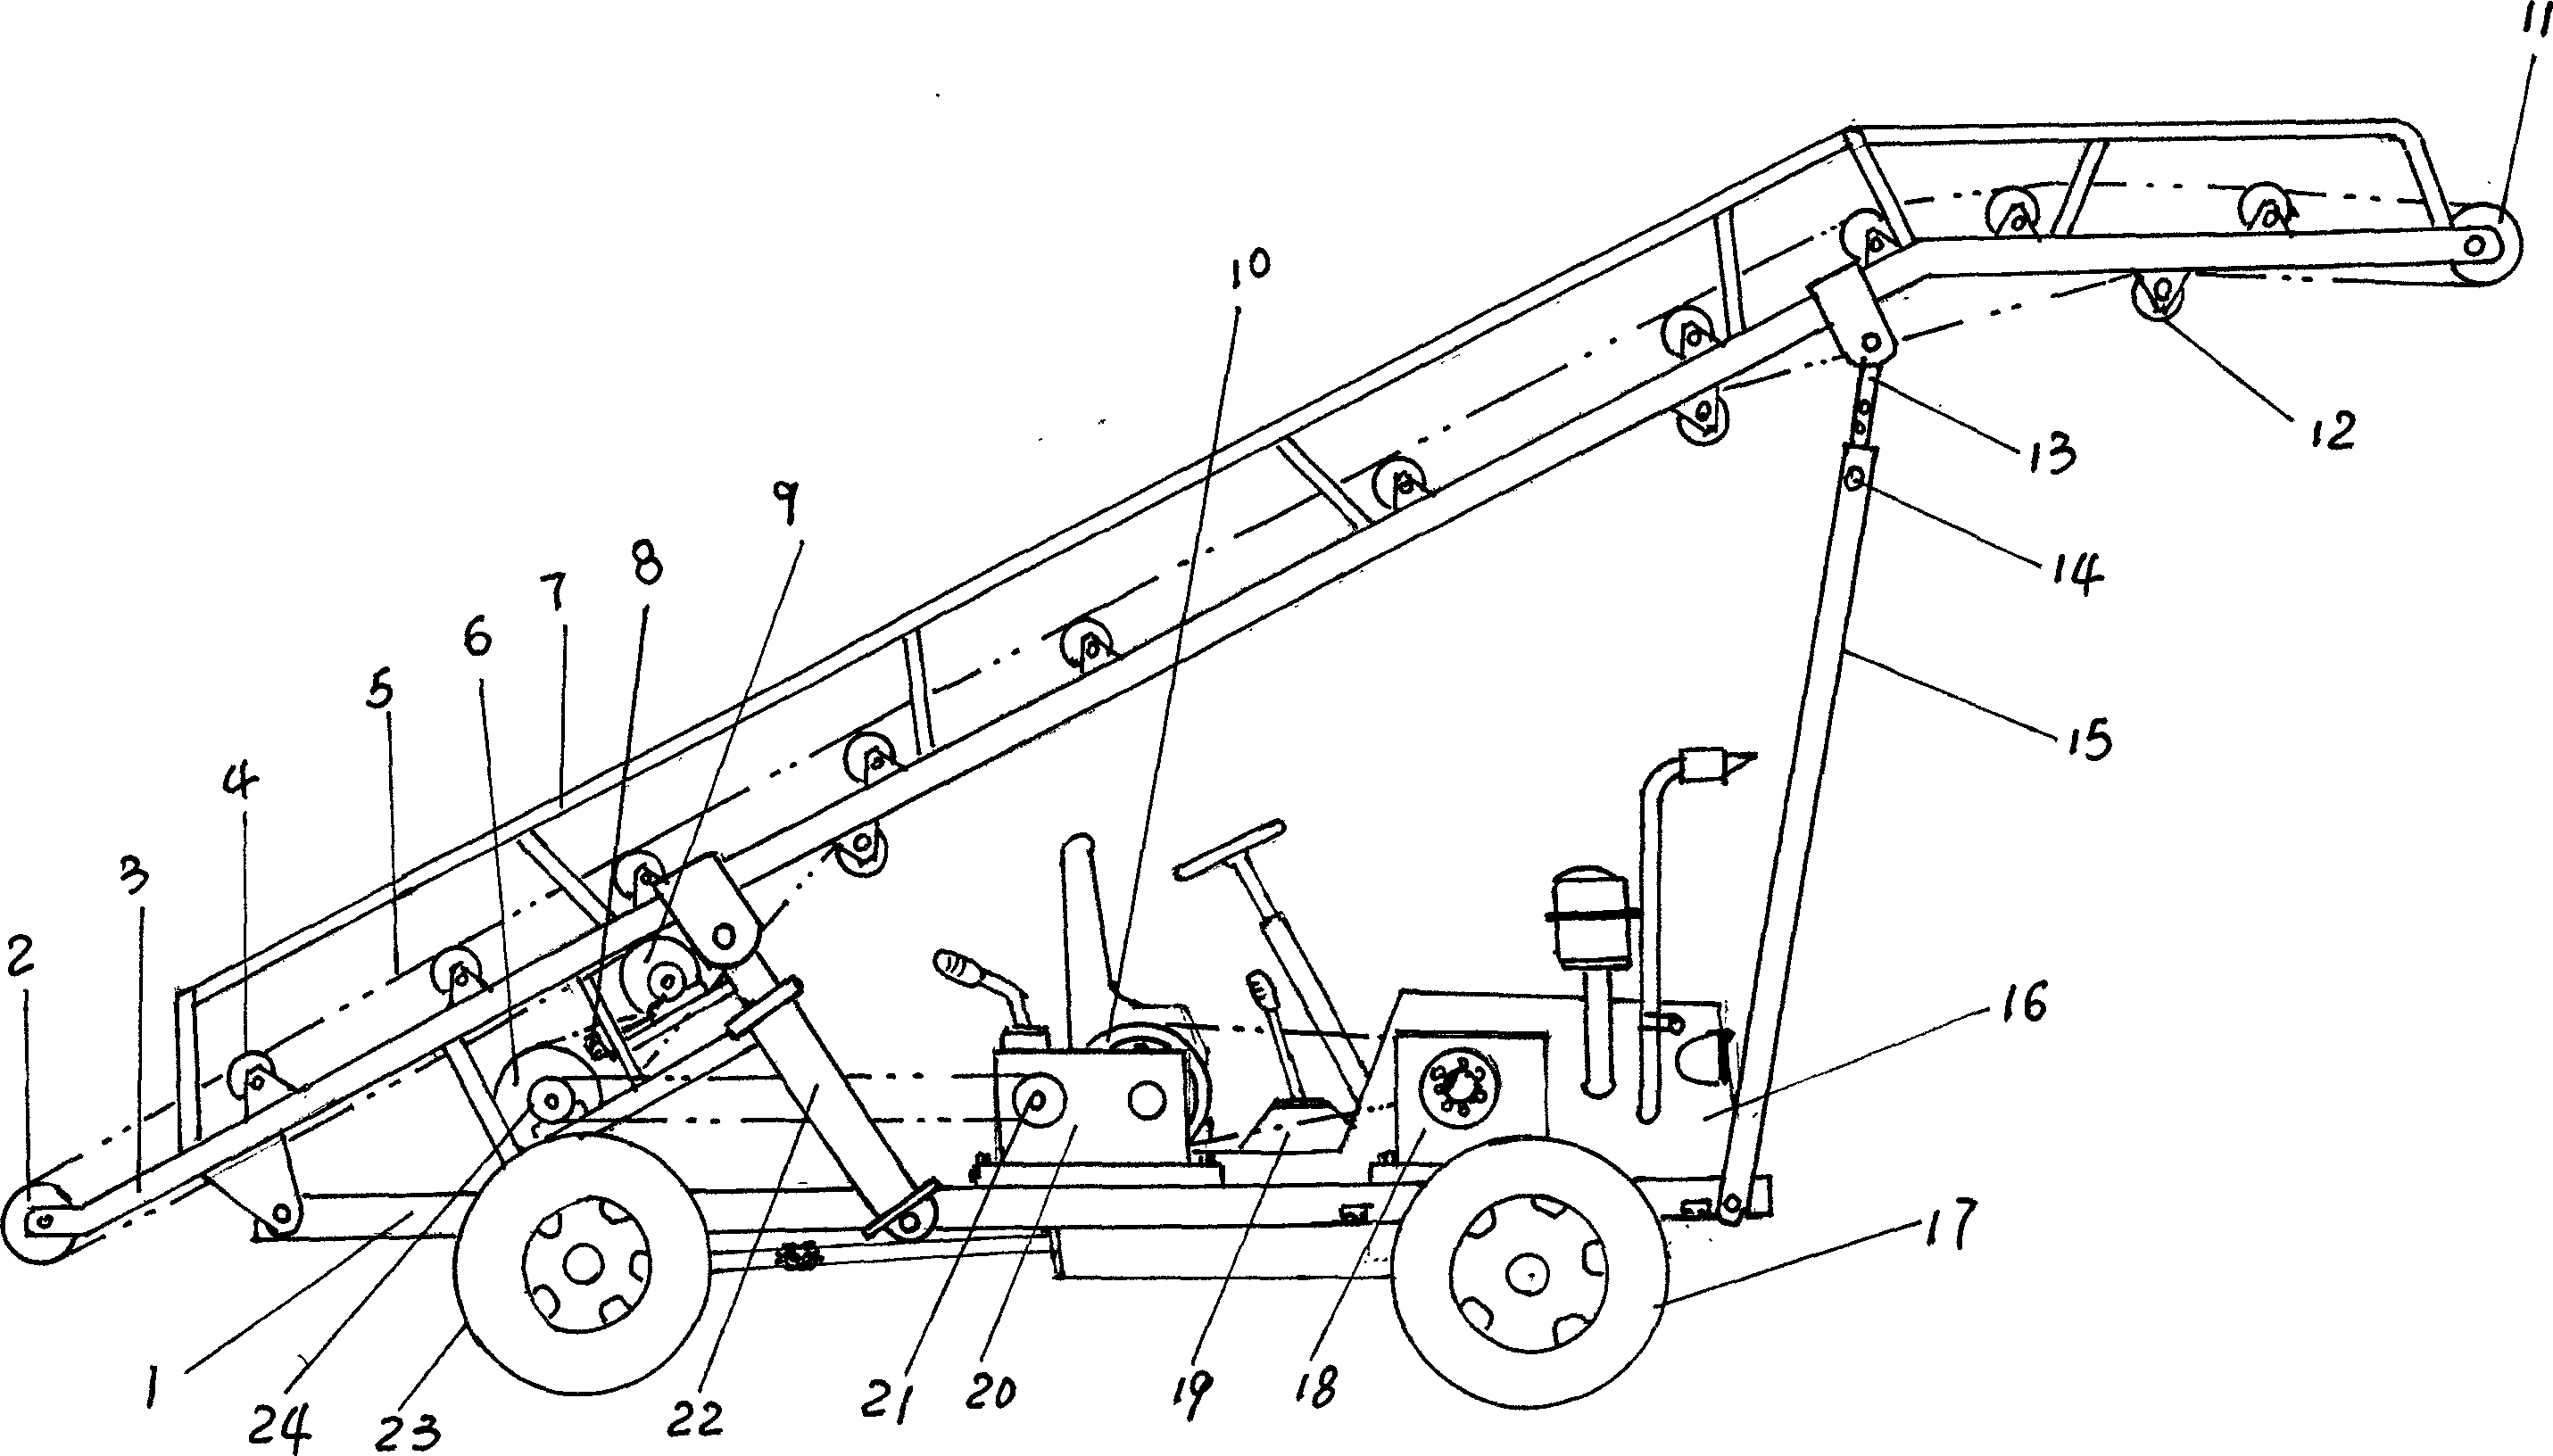 Vehicle-mounted adhesive tape conveyor